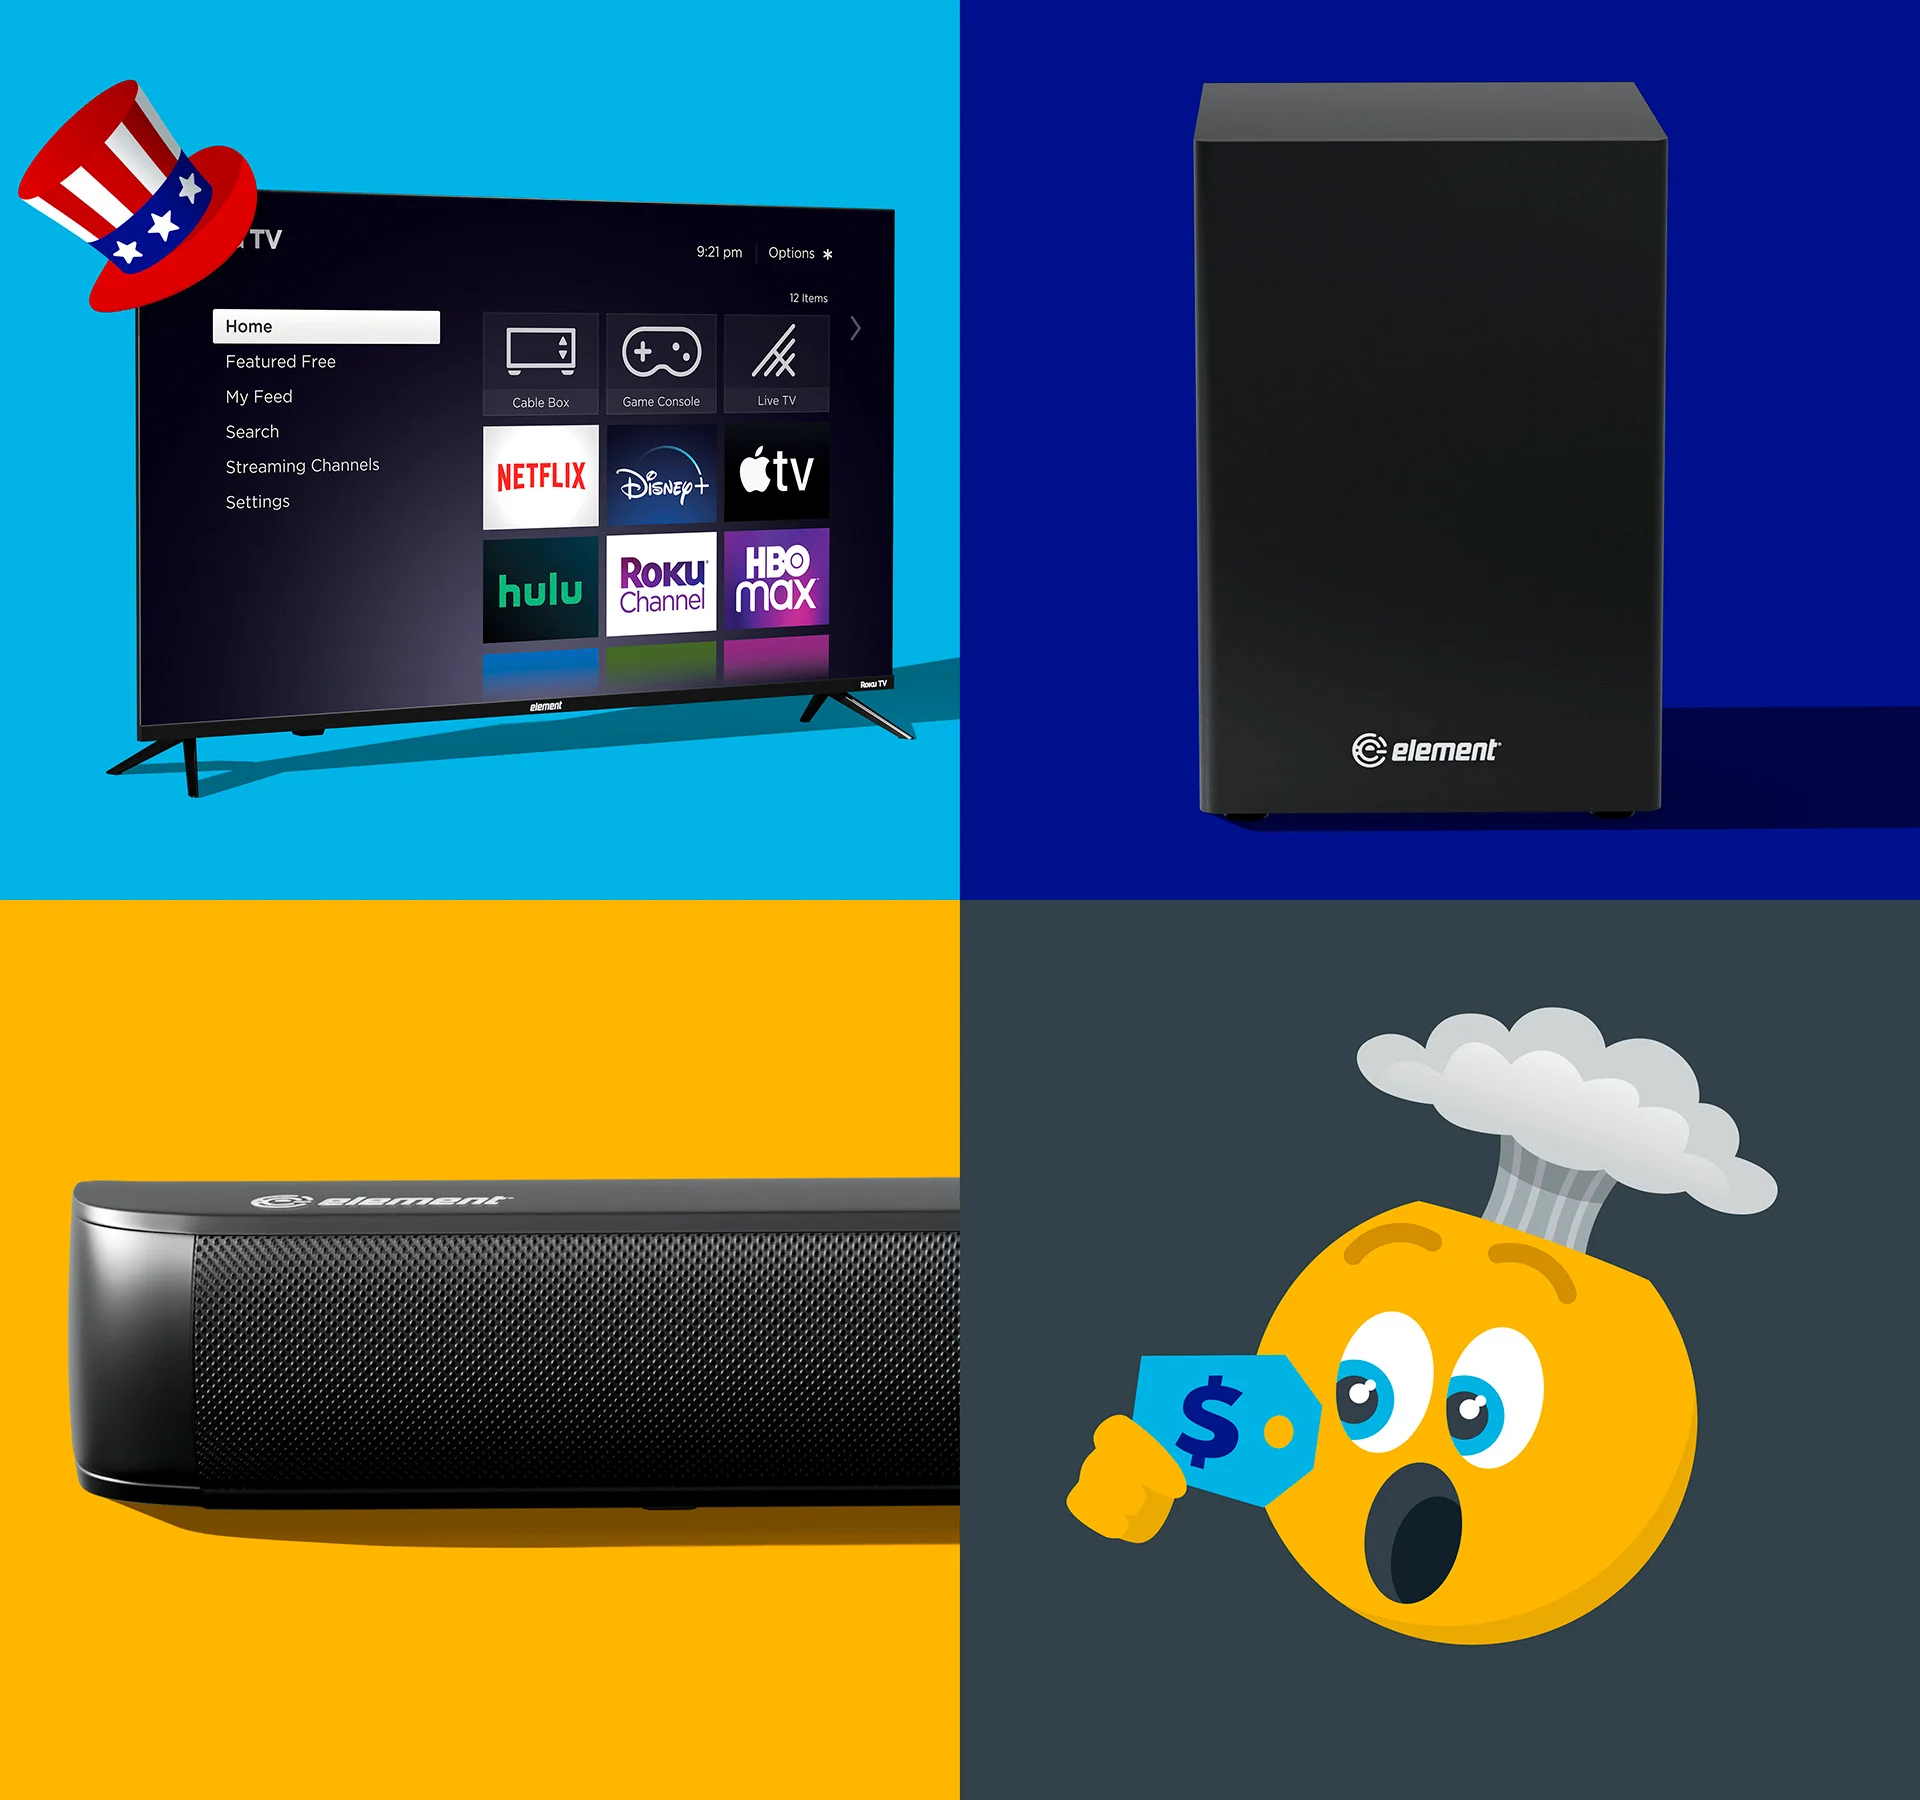 4 squares showing a TV, Speaker, sound bar, and a emoji